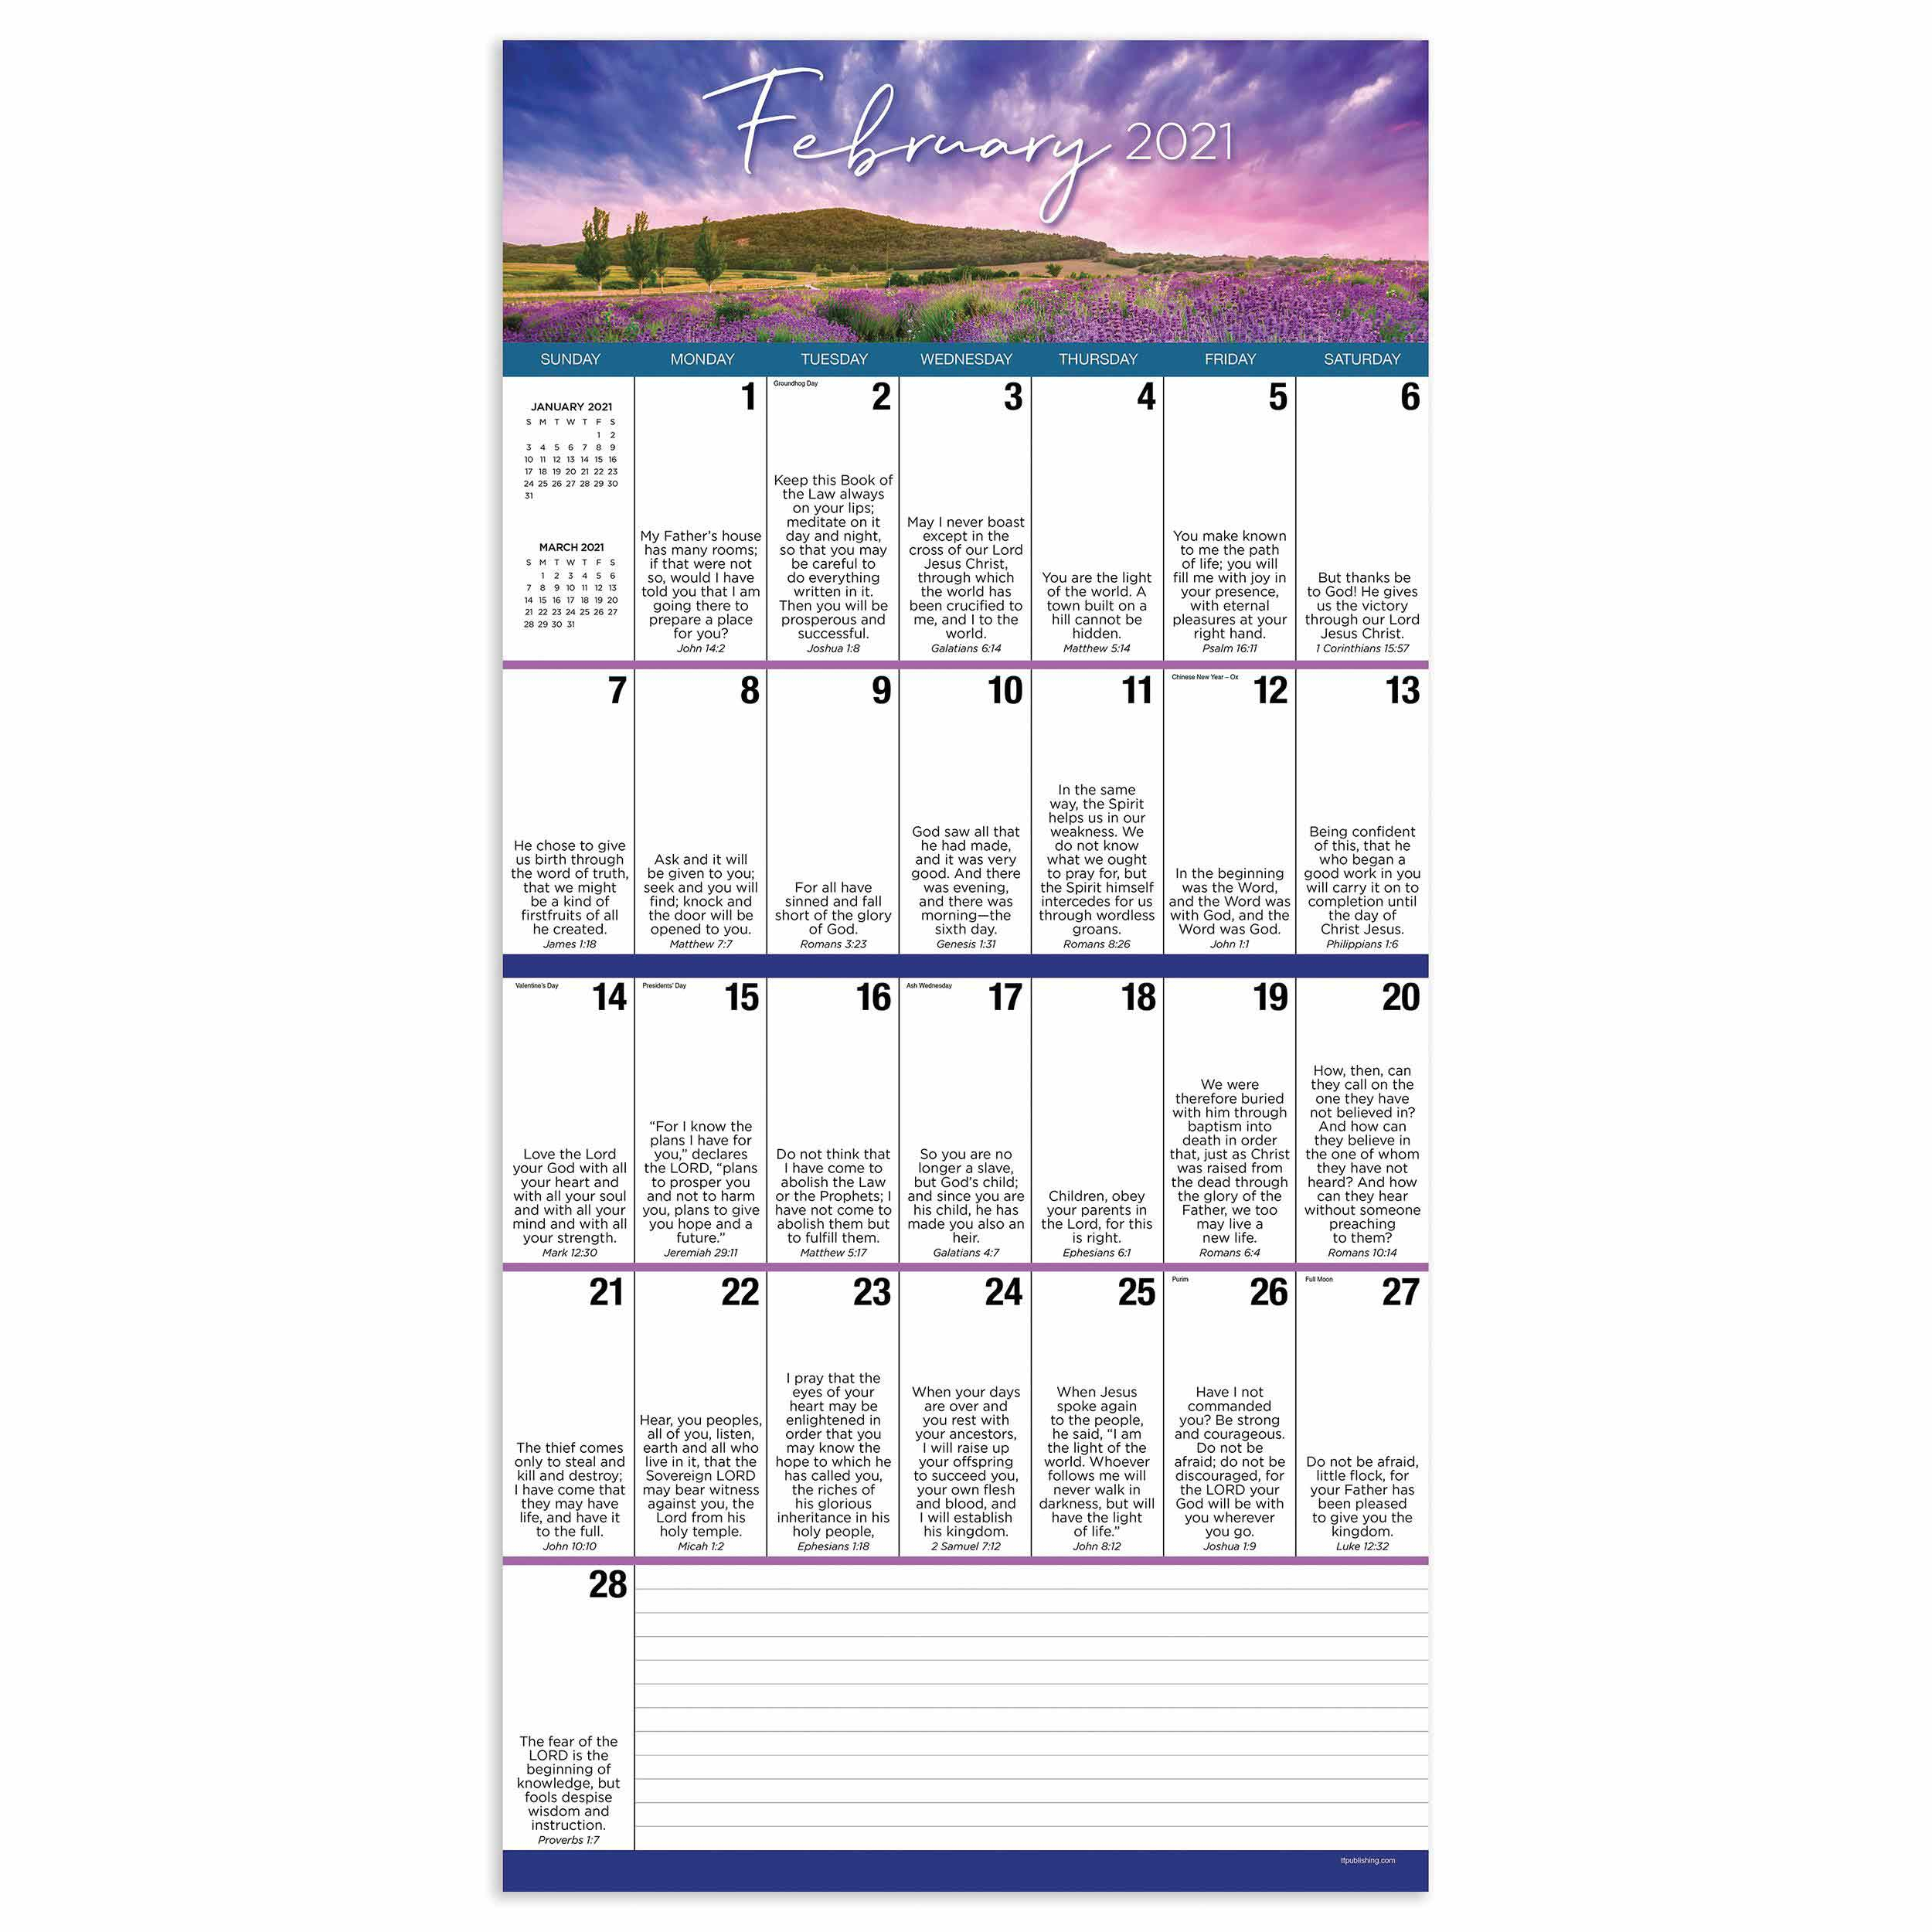 Daily Verse Calendar 2021 At Calendar Club